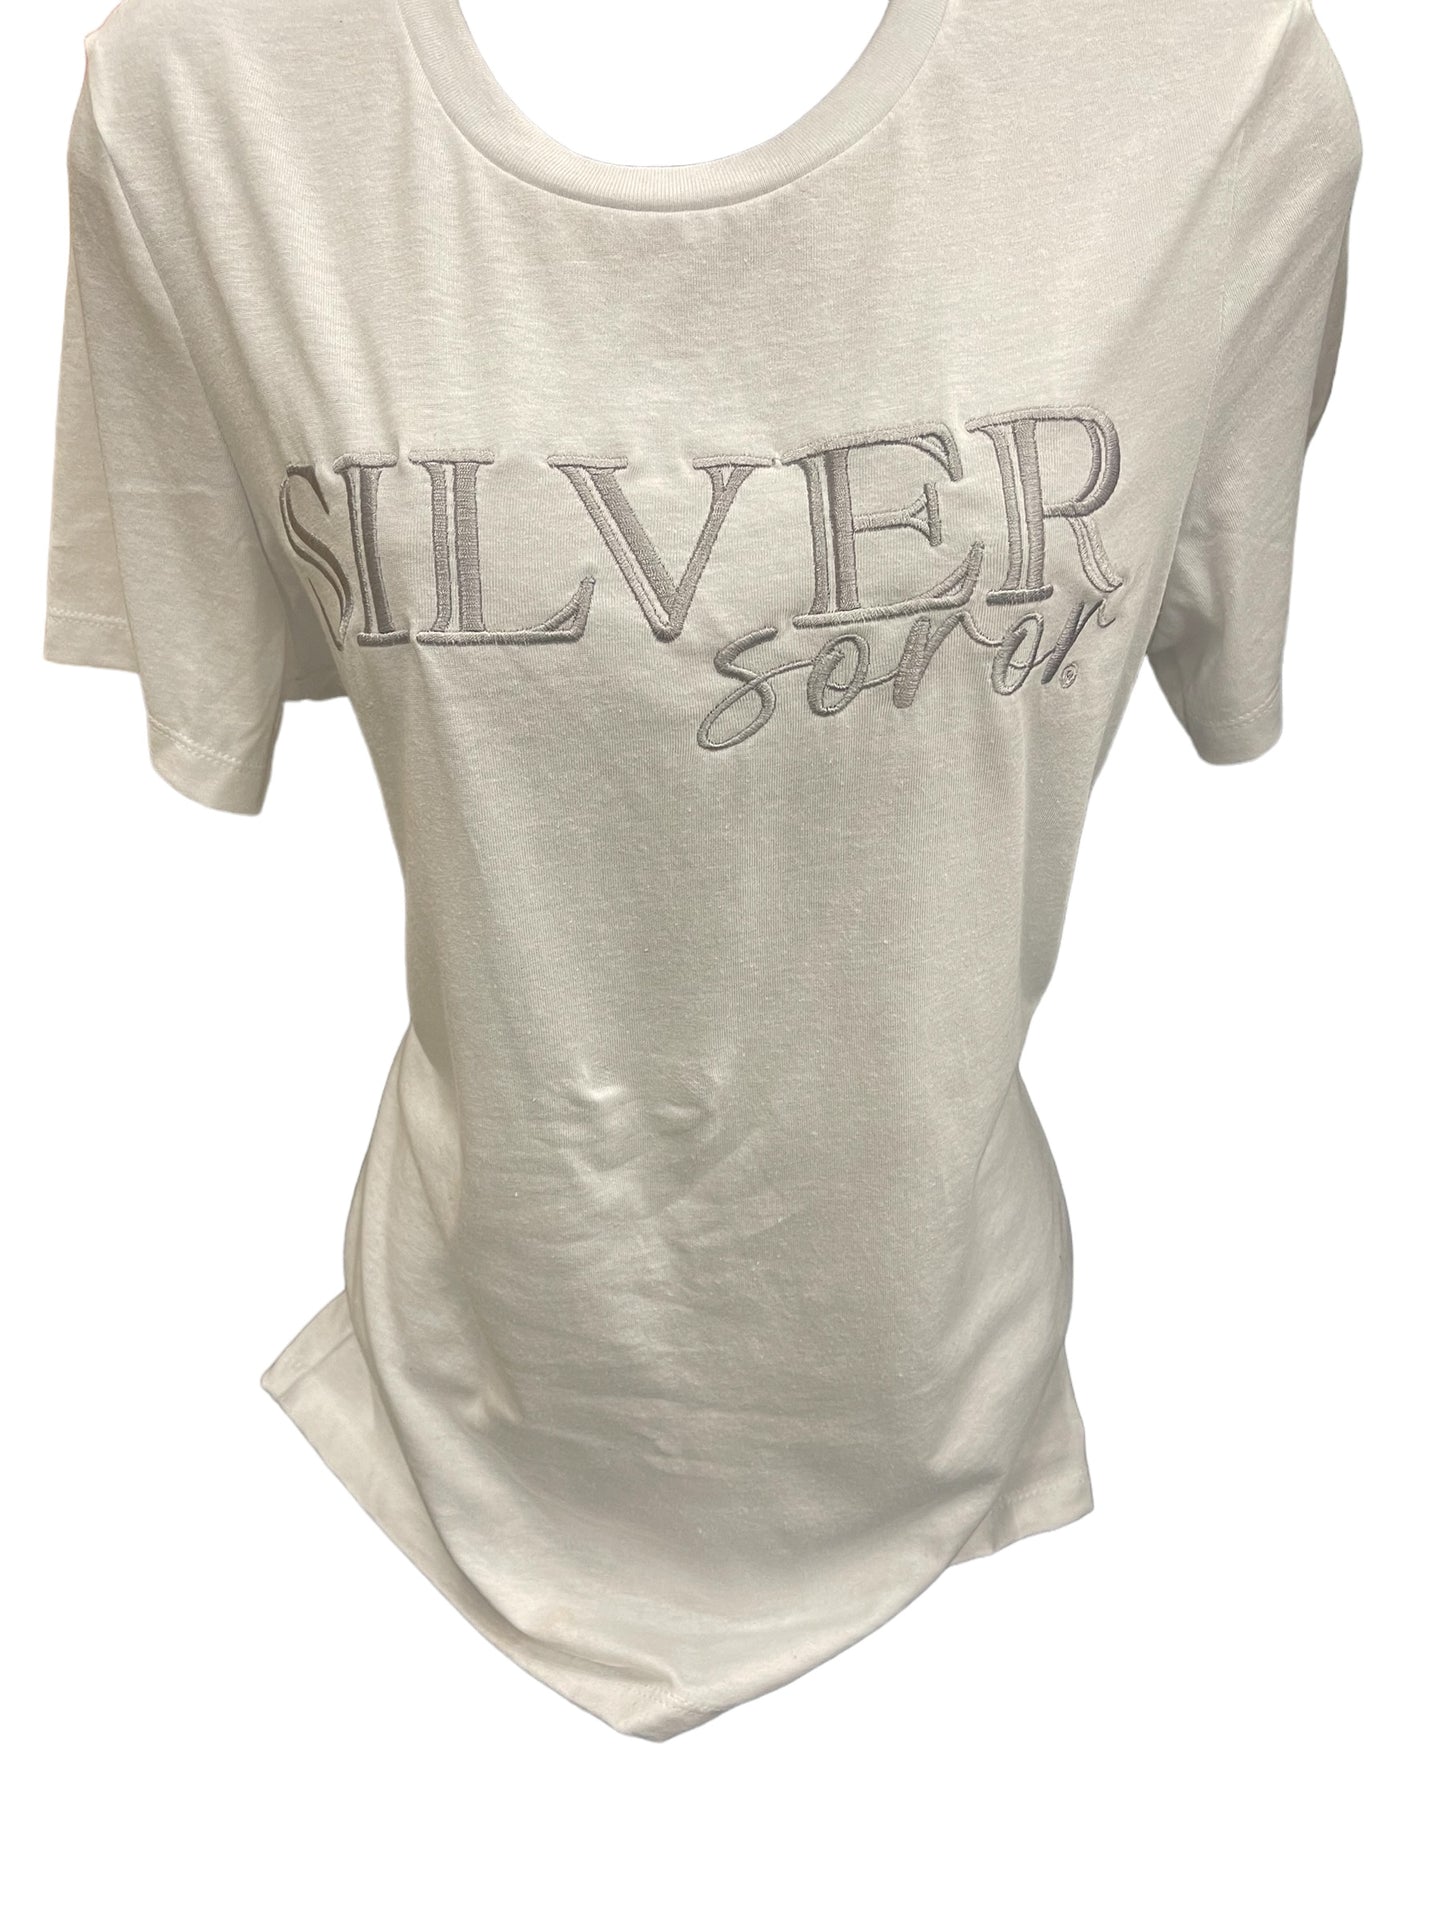 T-Shirt-Silver Soror